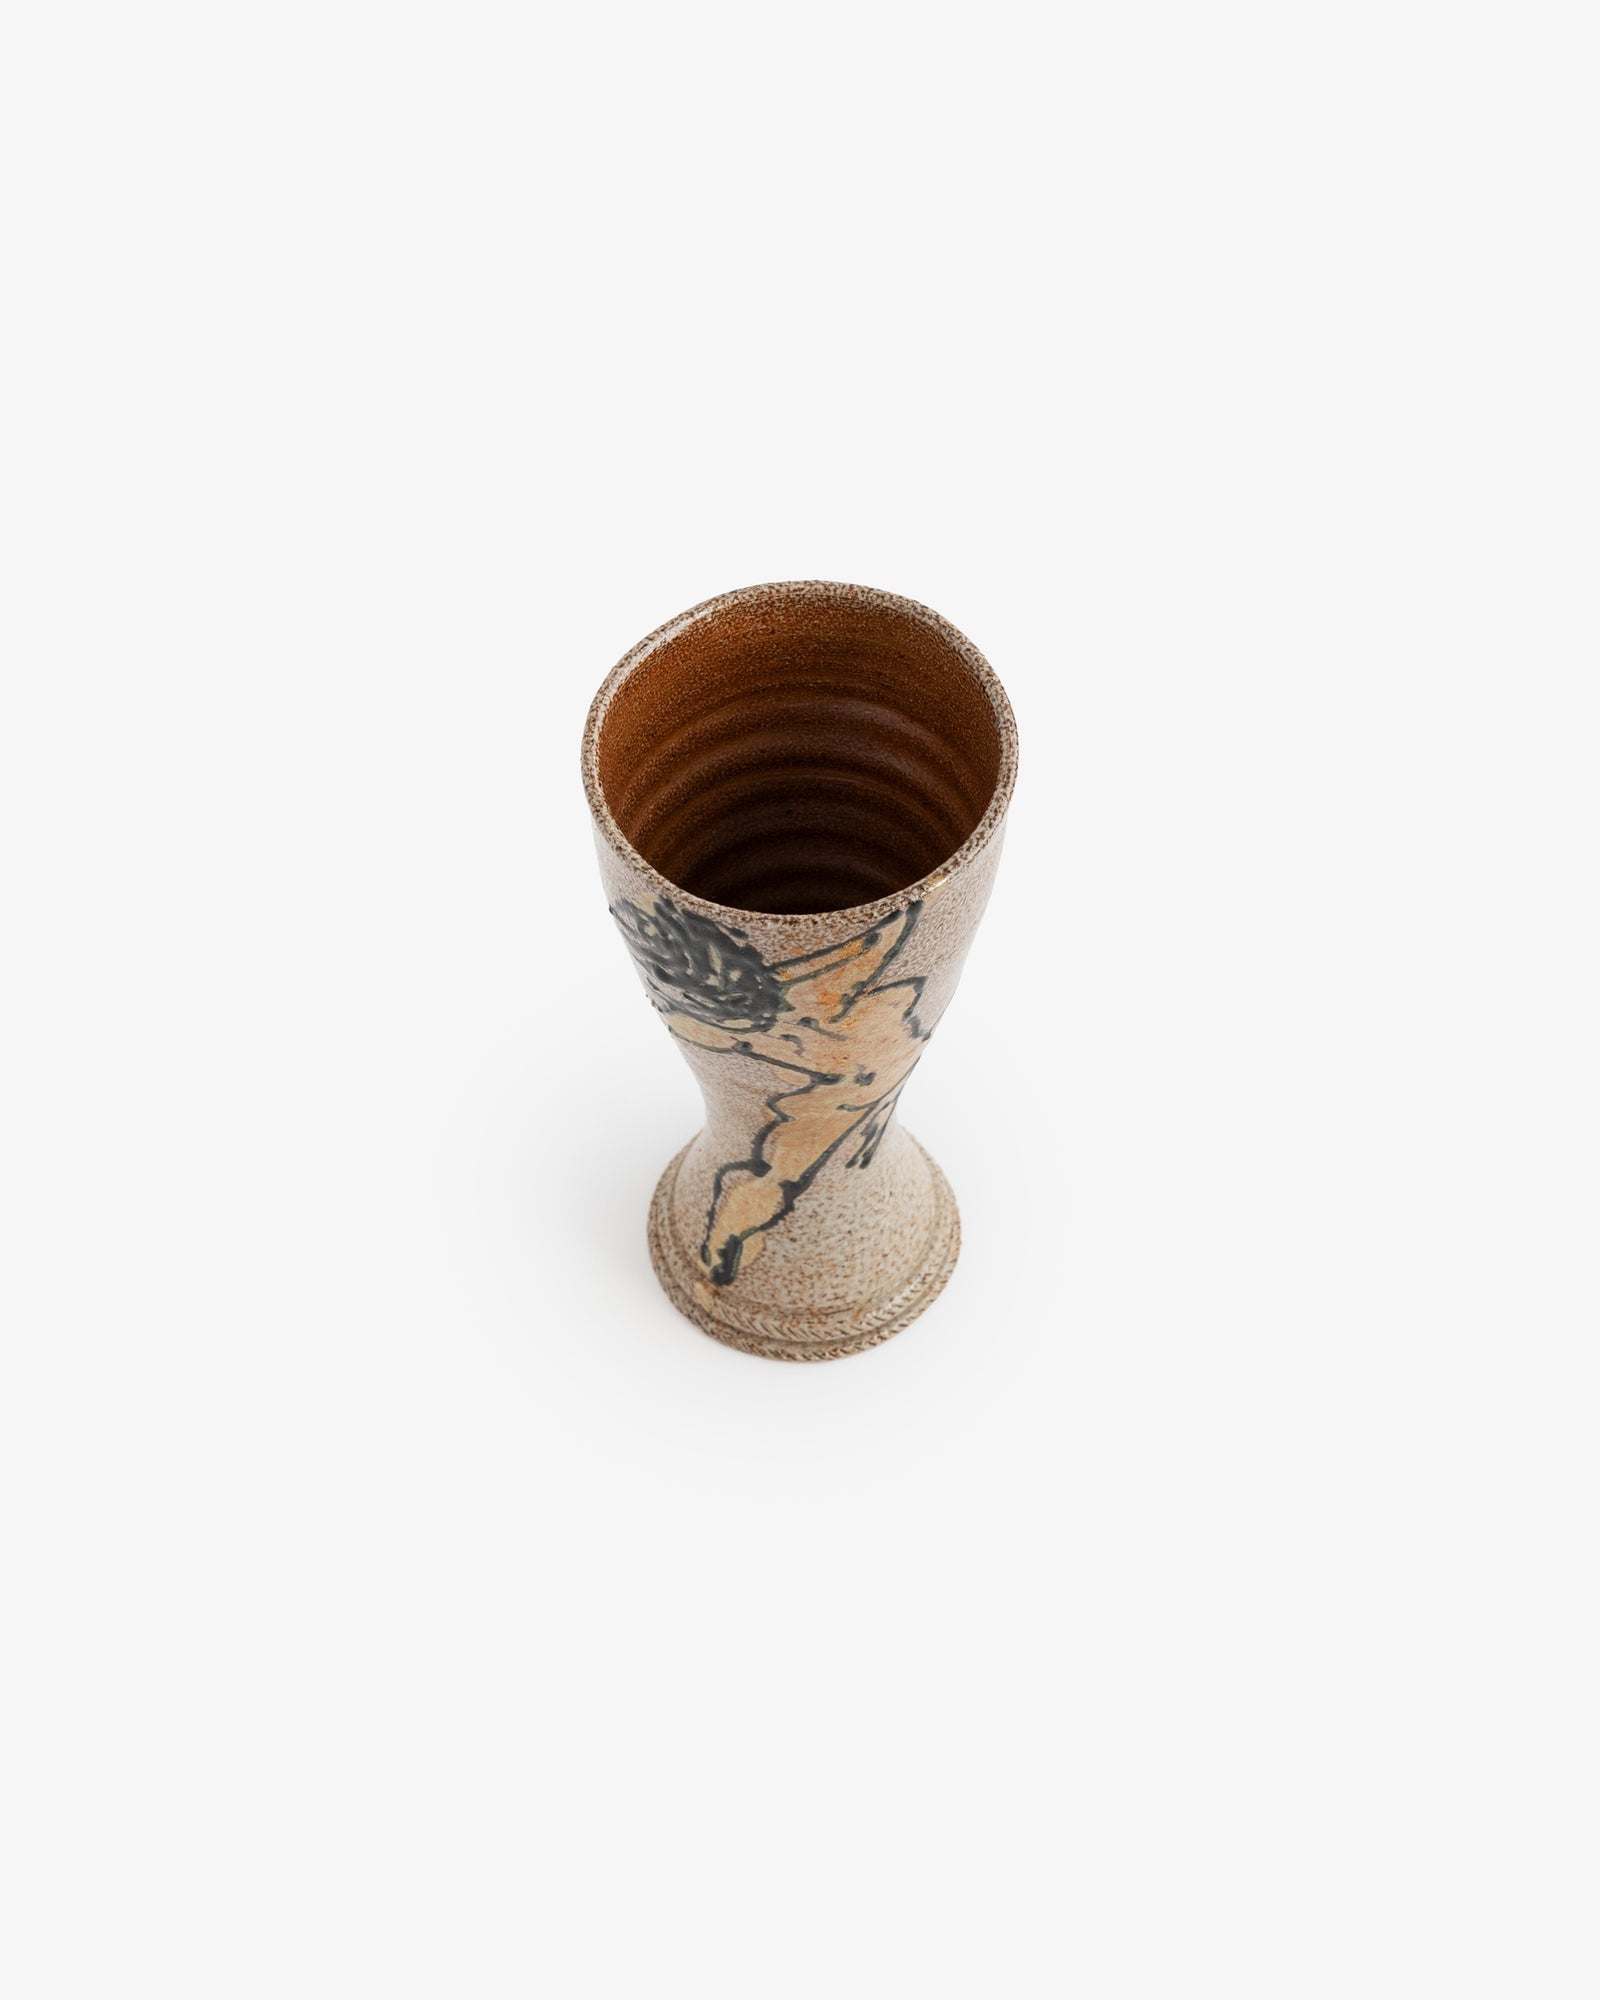 Paul Morris Painted Stoneware Vase